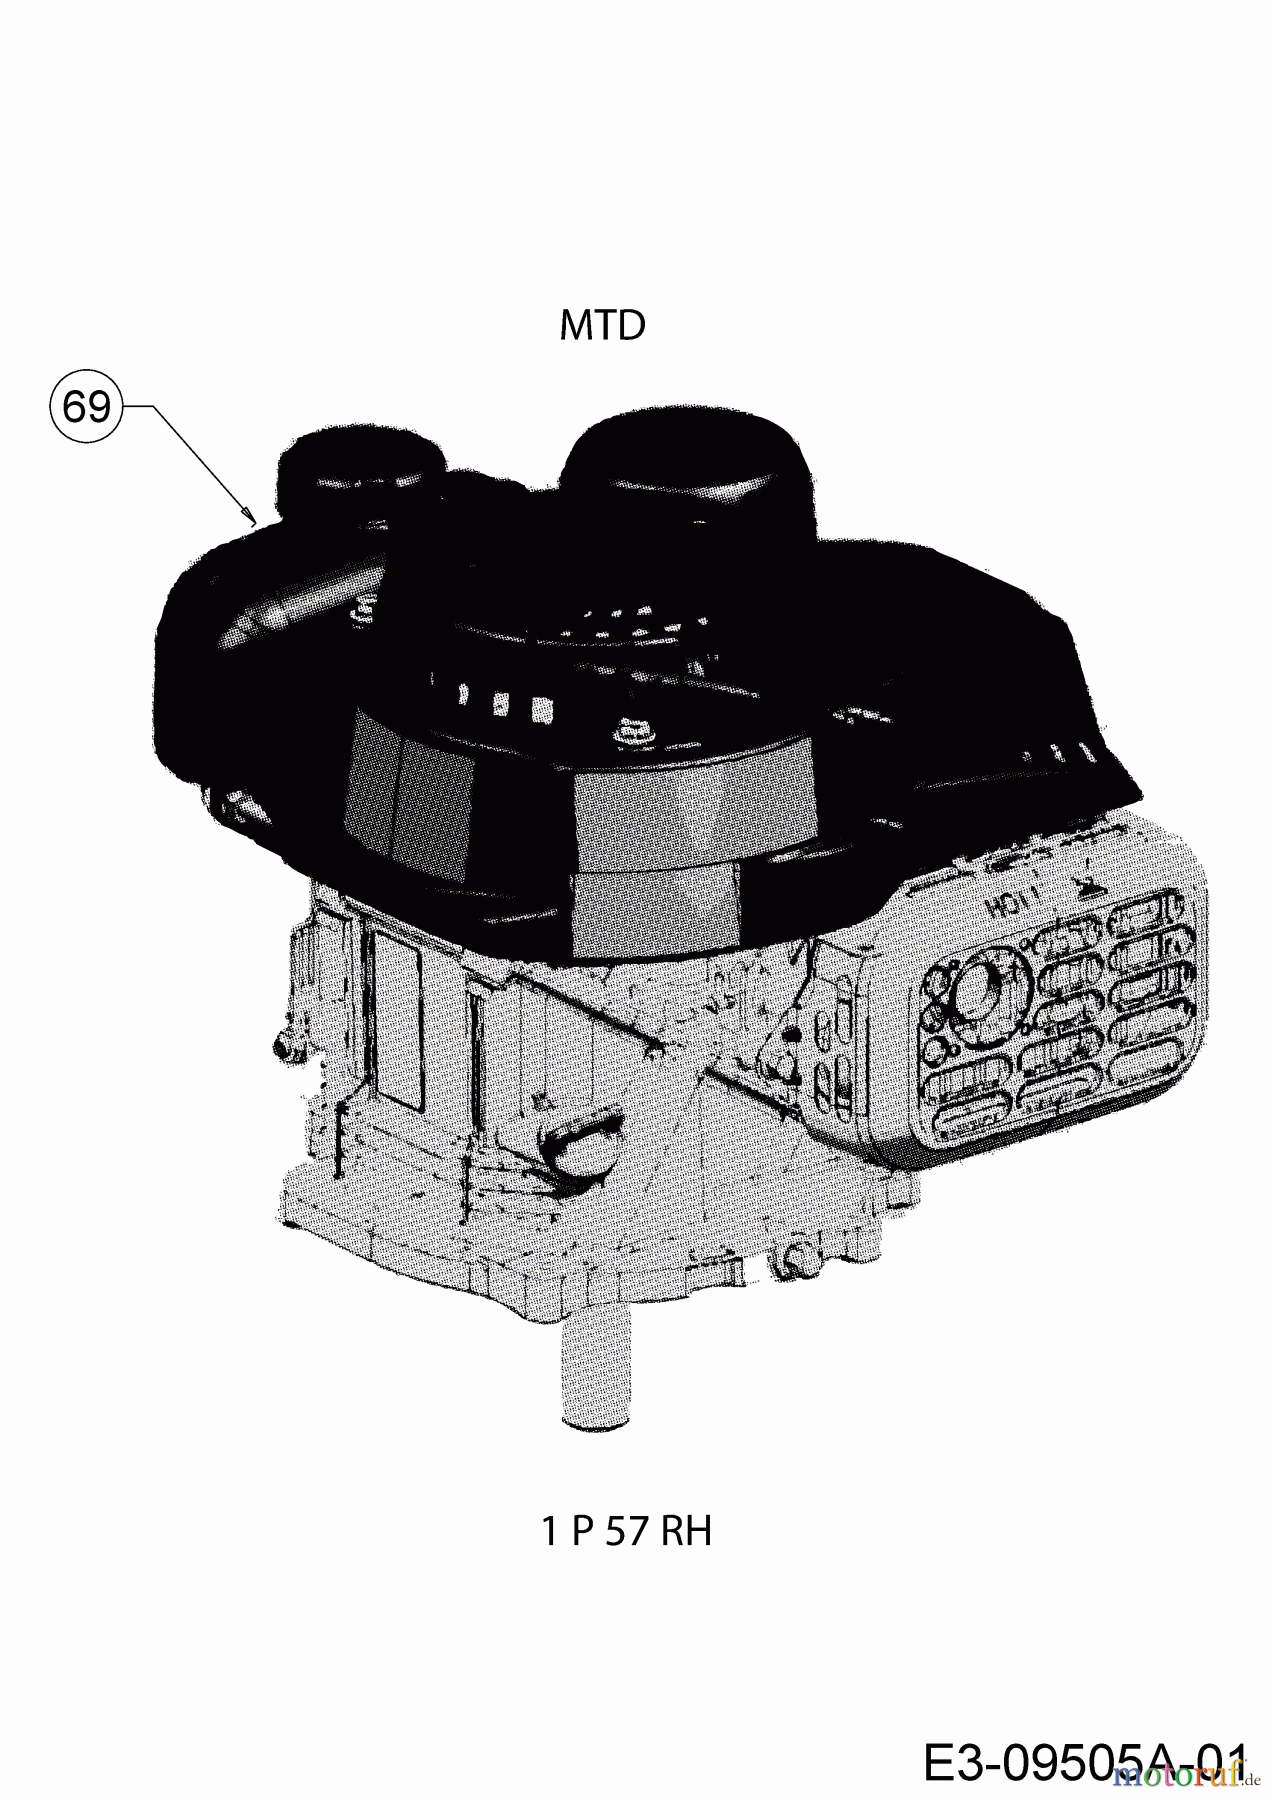  MTD Petrol mower Smart G 46 MO 11E-70SJ600 (2019) Engine MTD